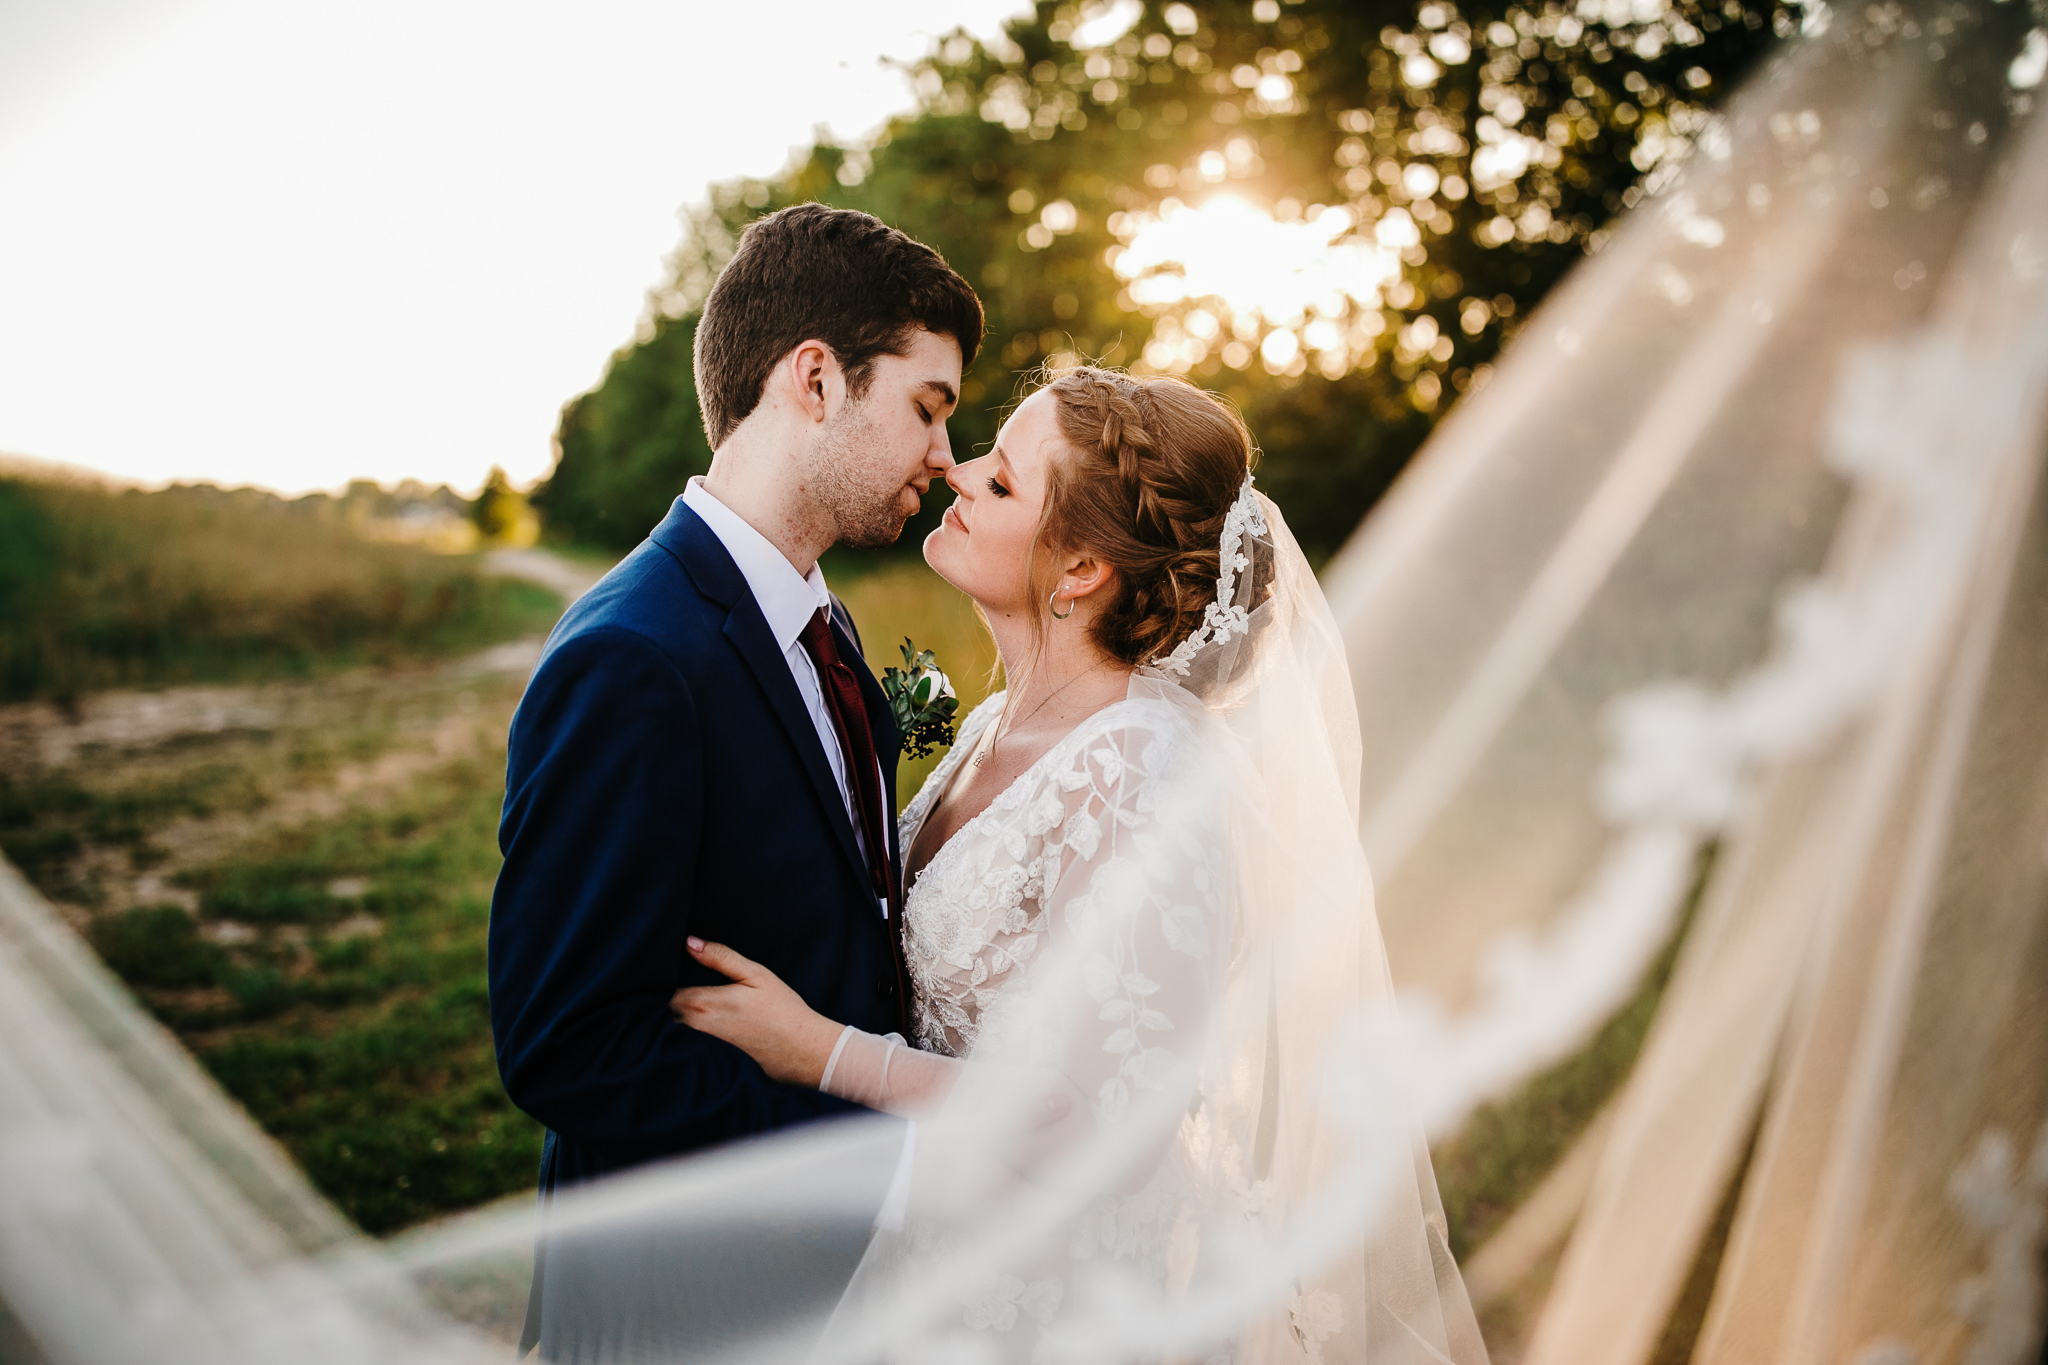 Romantic sunset bride and groom photo